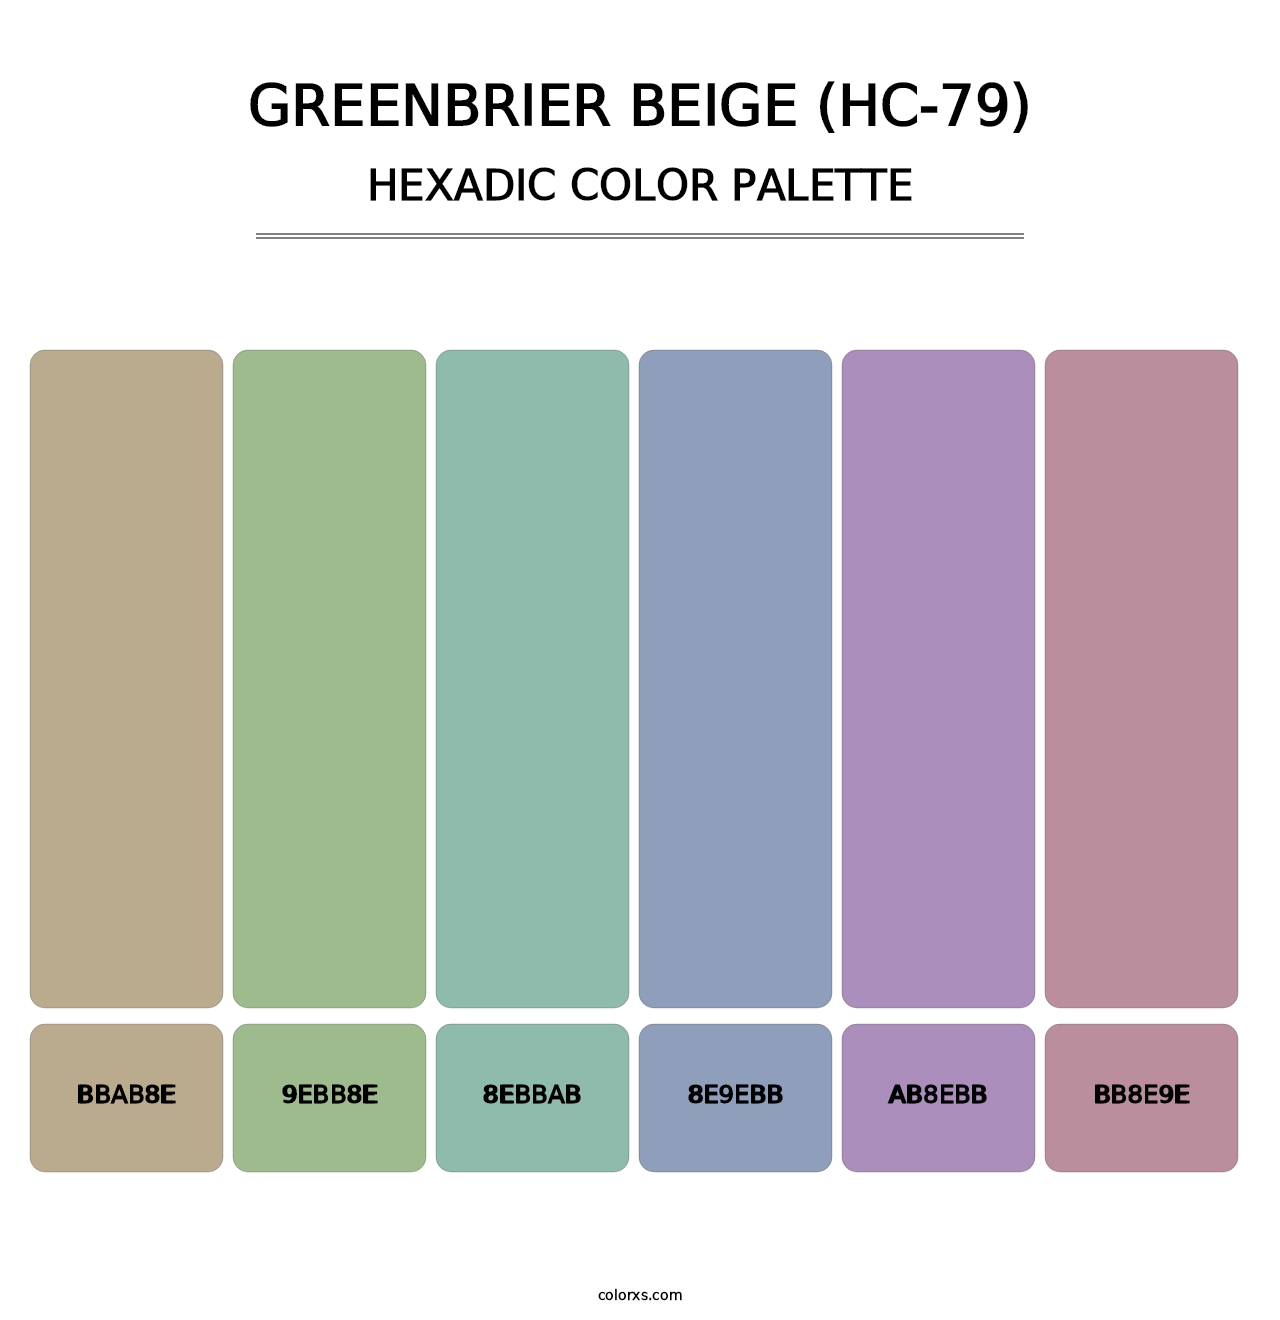 Greenbrier Beige (HC-79) - Hexadic Color Palette